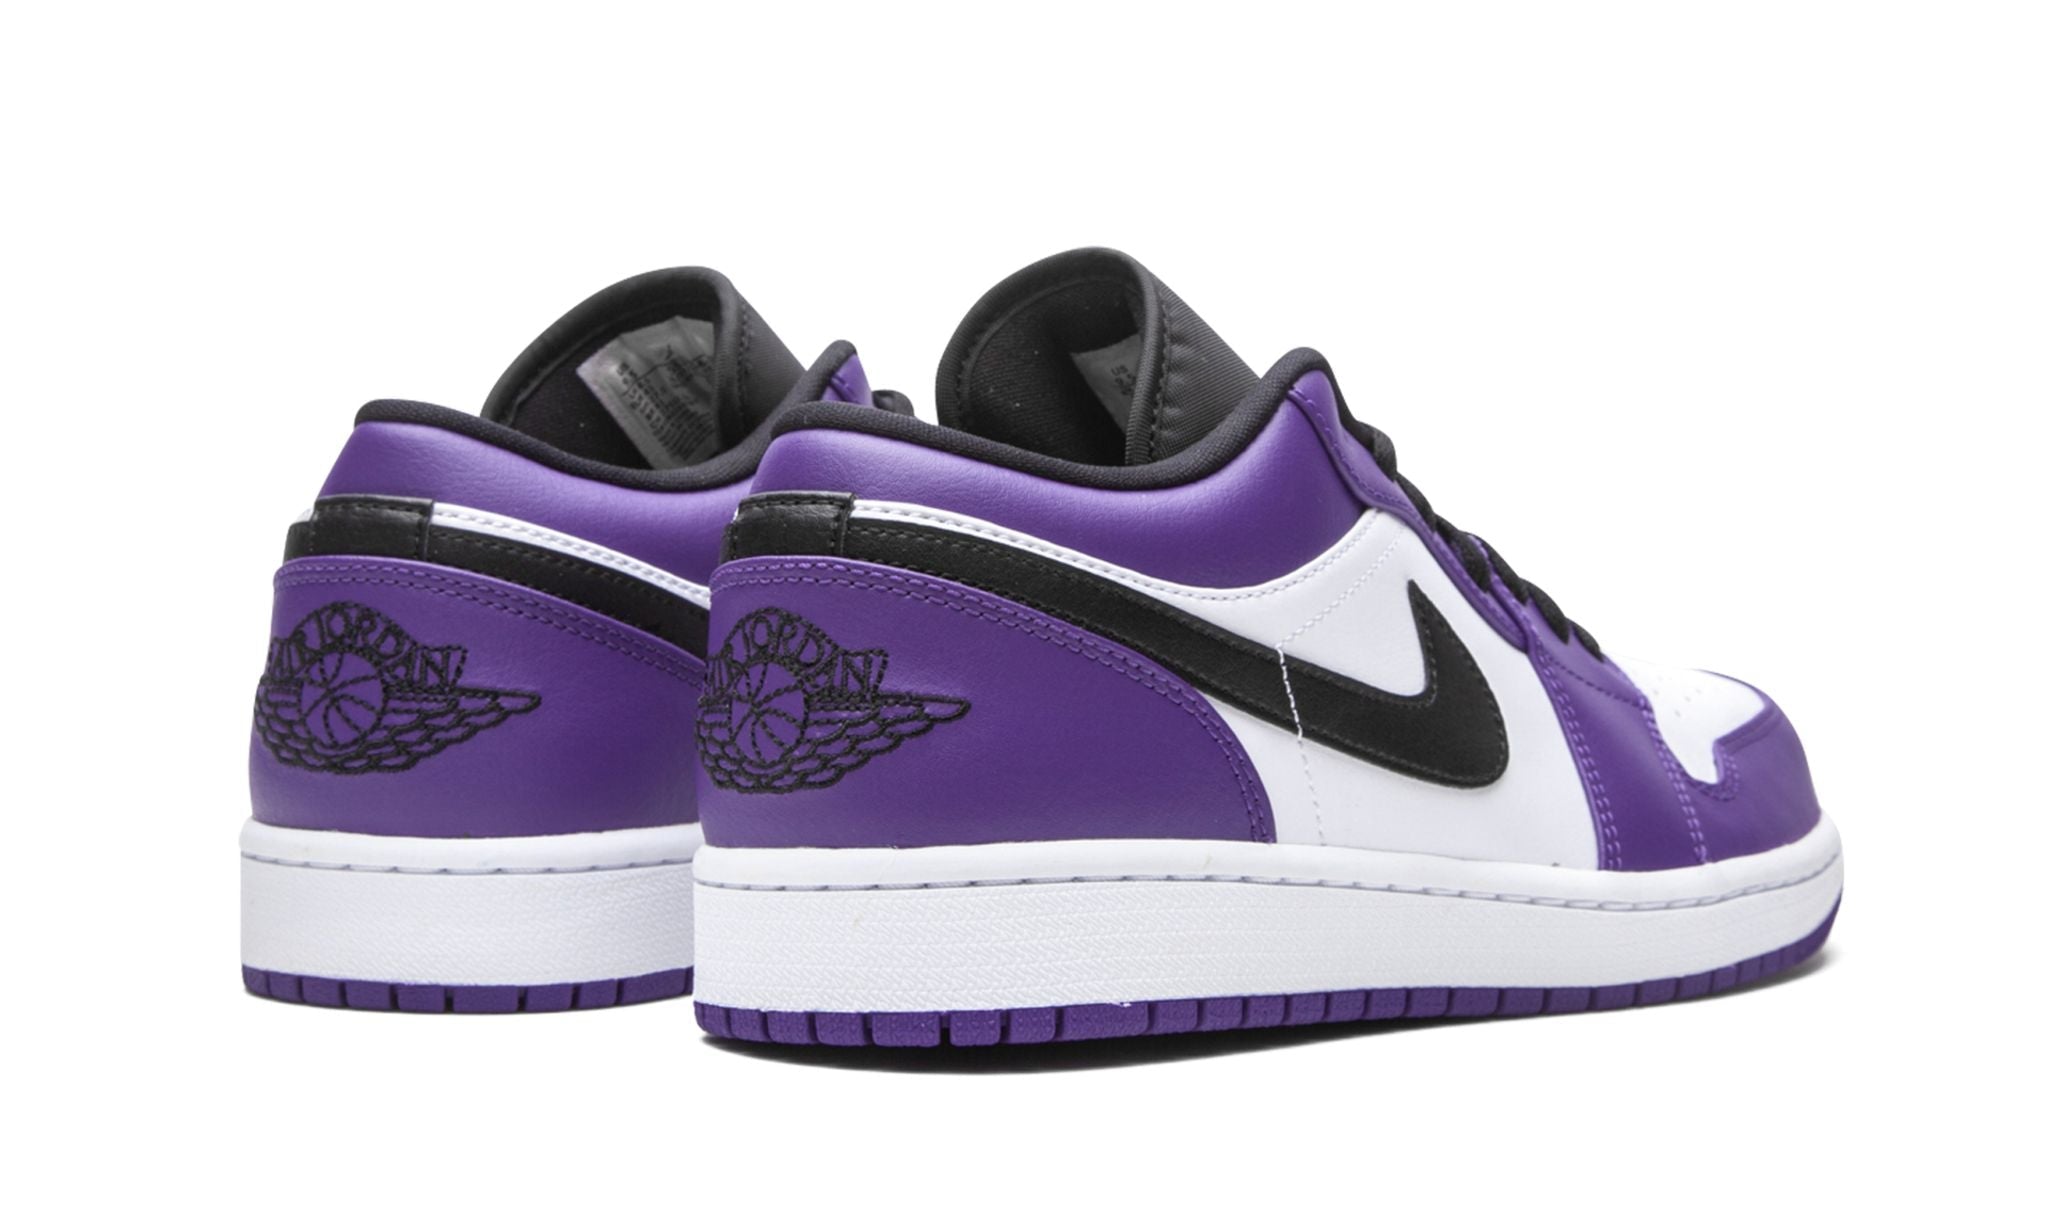 Air Jordan 1 Low Court Purple White - Jordan 1 Low - Pirri - Jordan 1 Low Paars